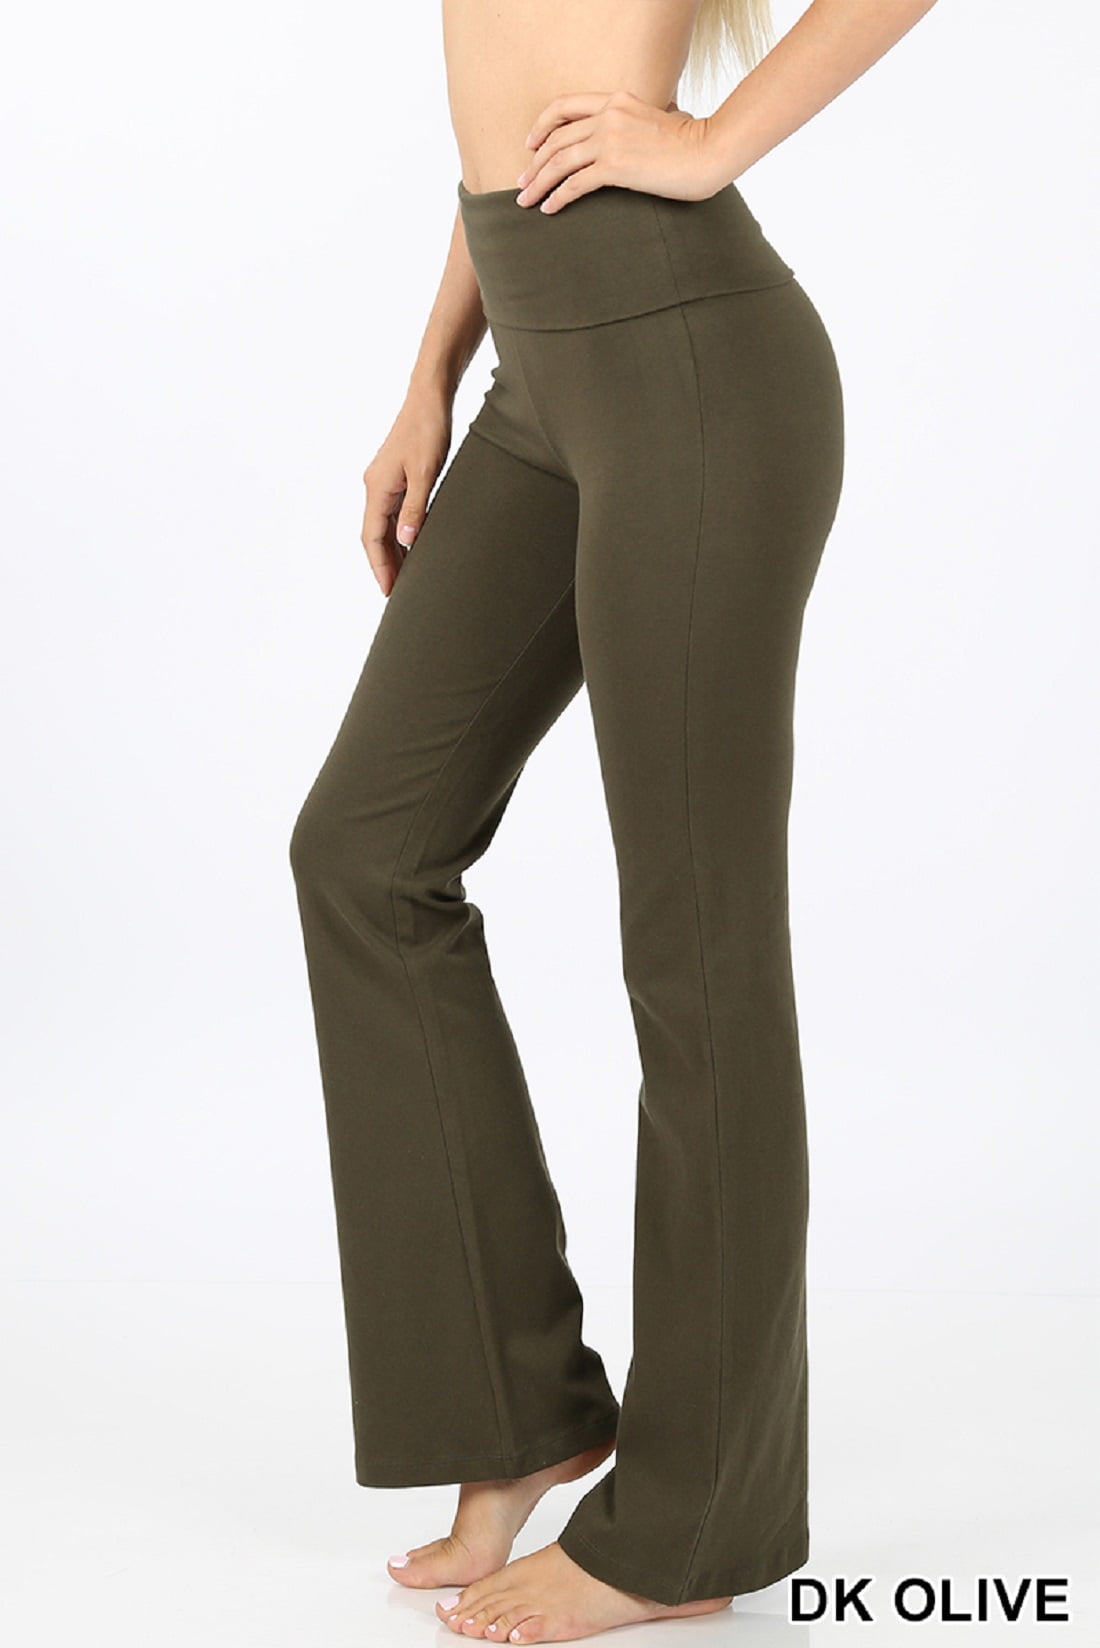 Zenana Premium Cotton FOLD Over Yoga Flare Pants - Brick - XL